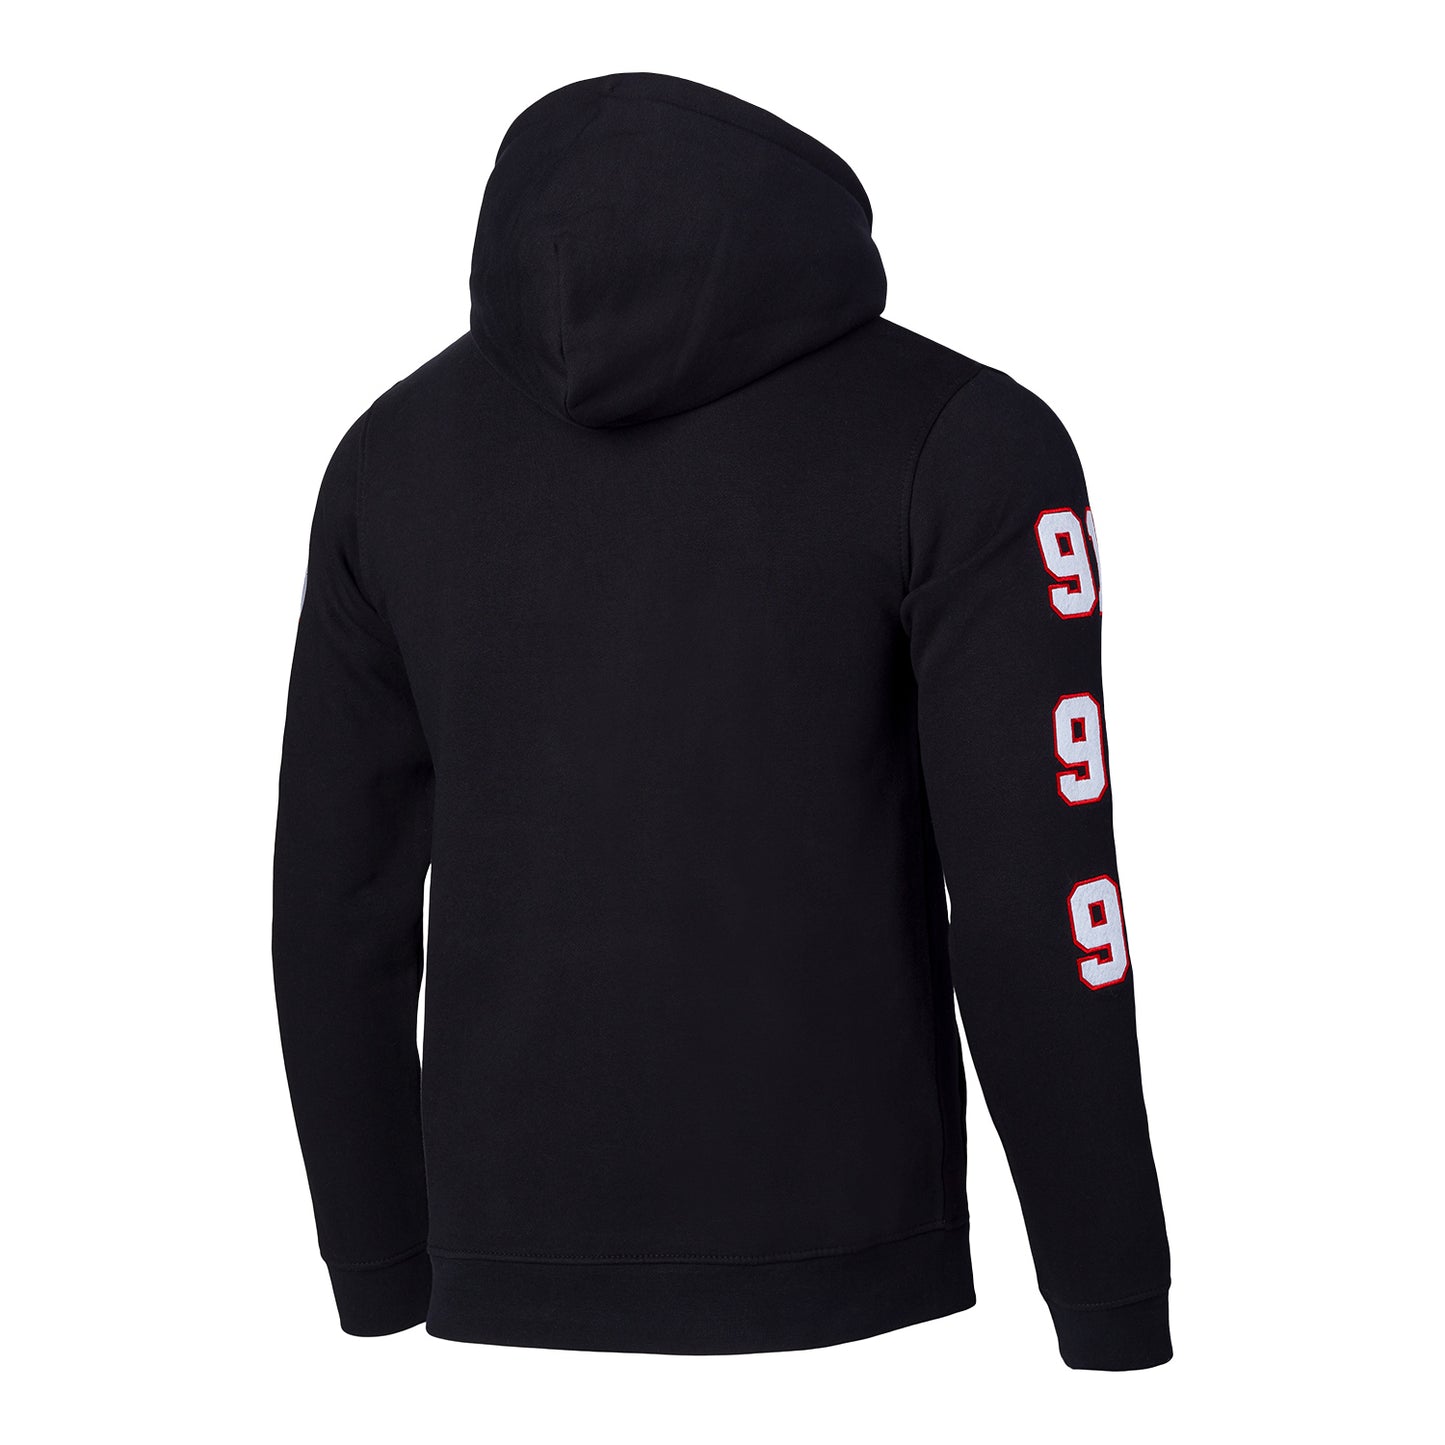 Chicago Bulls 1966 6x Black Hooded Sweatshirt in black - back view